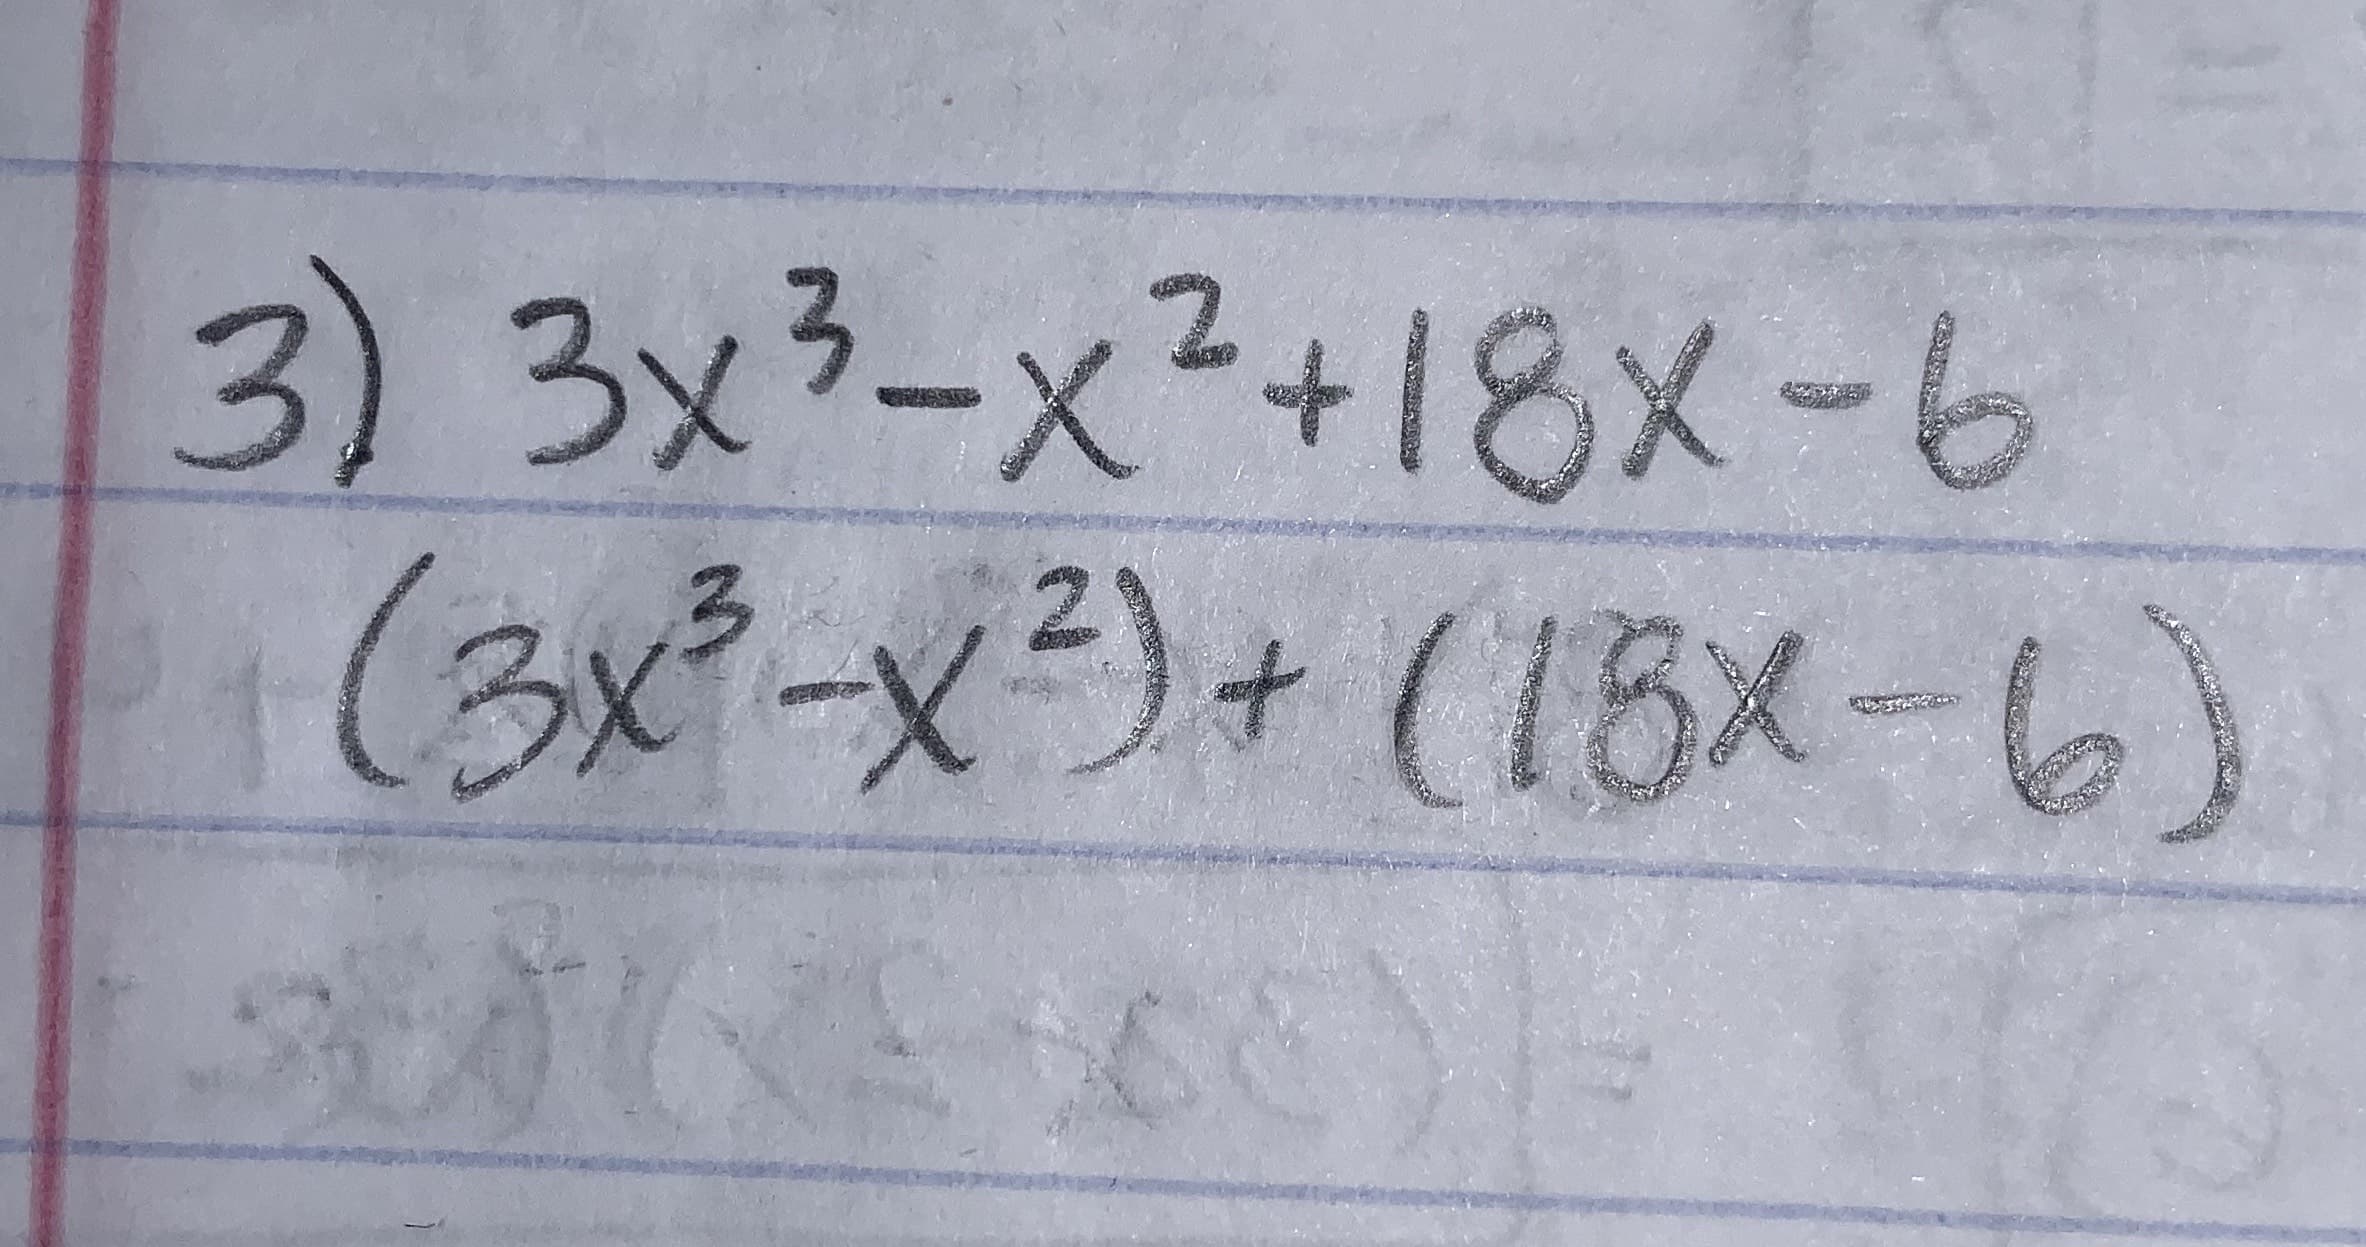 3) 3x3-x2+18X-6
(3x-x3)+ (1BX-)
